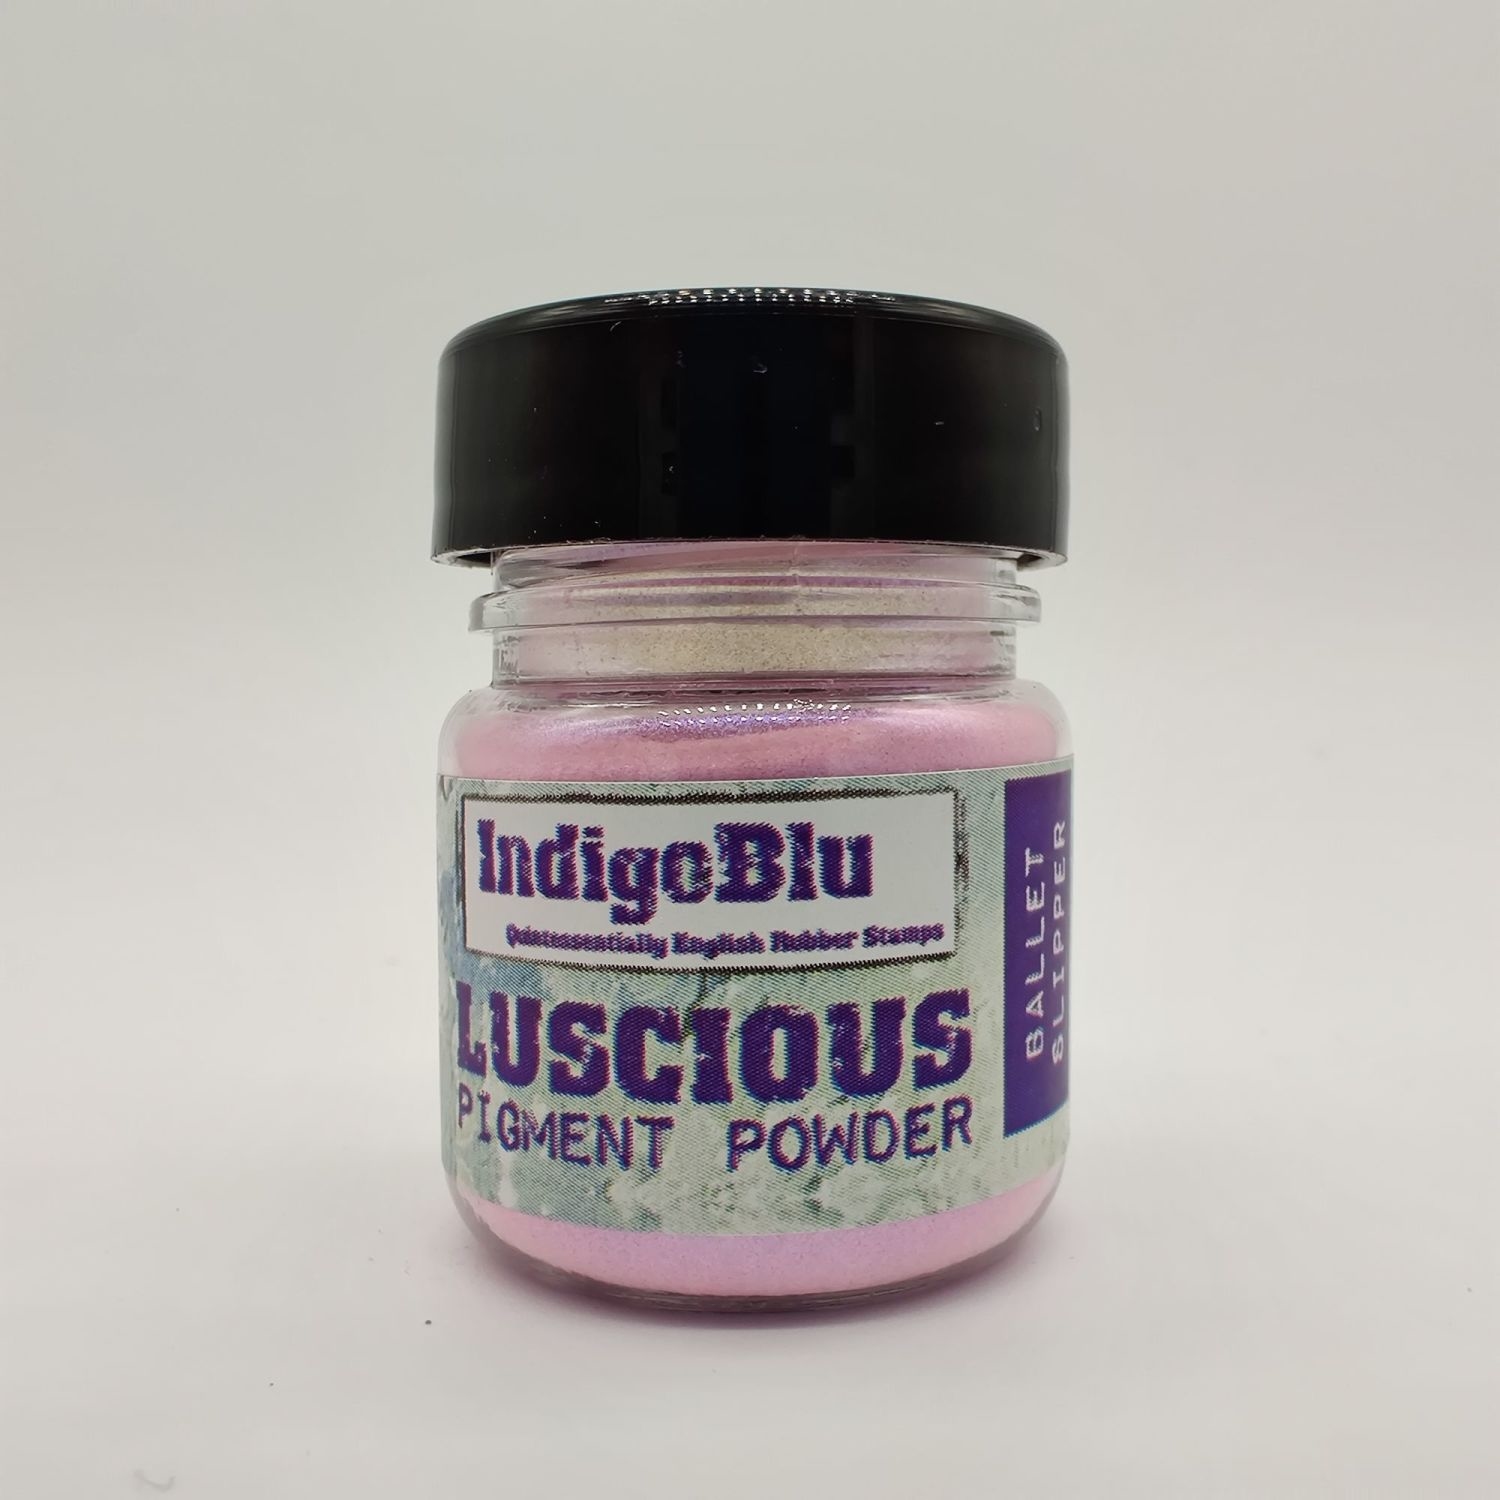 Luscious Pigment Powder | IndigoBlu | Ballet Slipper | 25ml